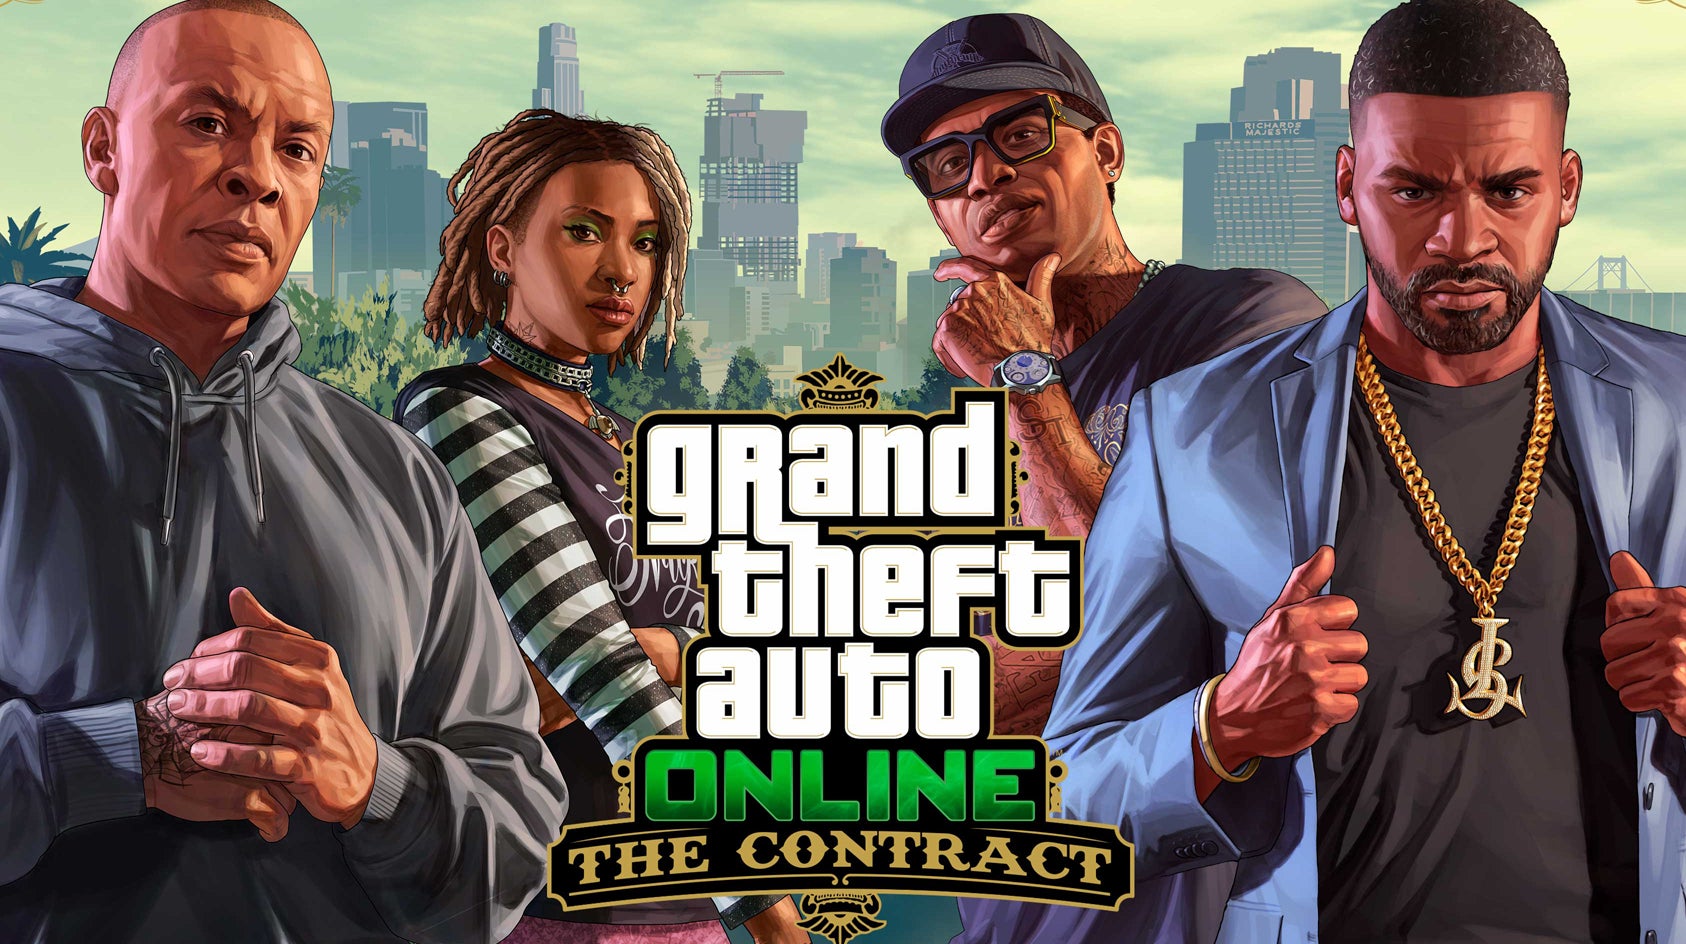 Image for Příběhové DLC The Contract do GTA Online